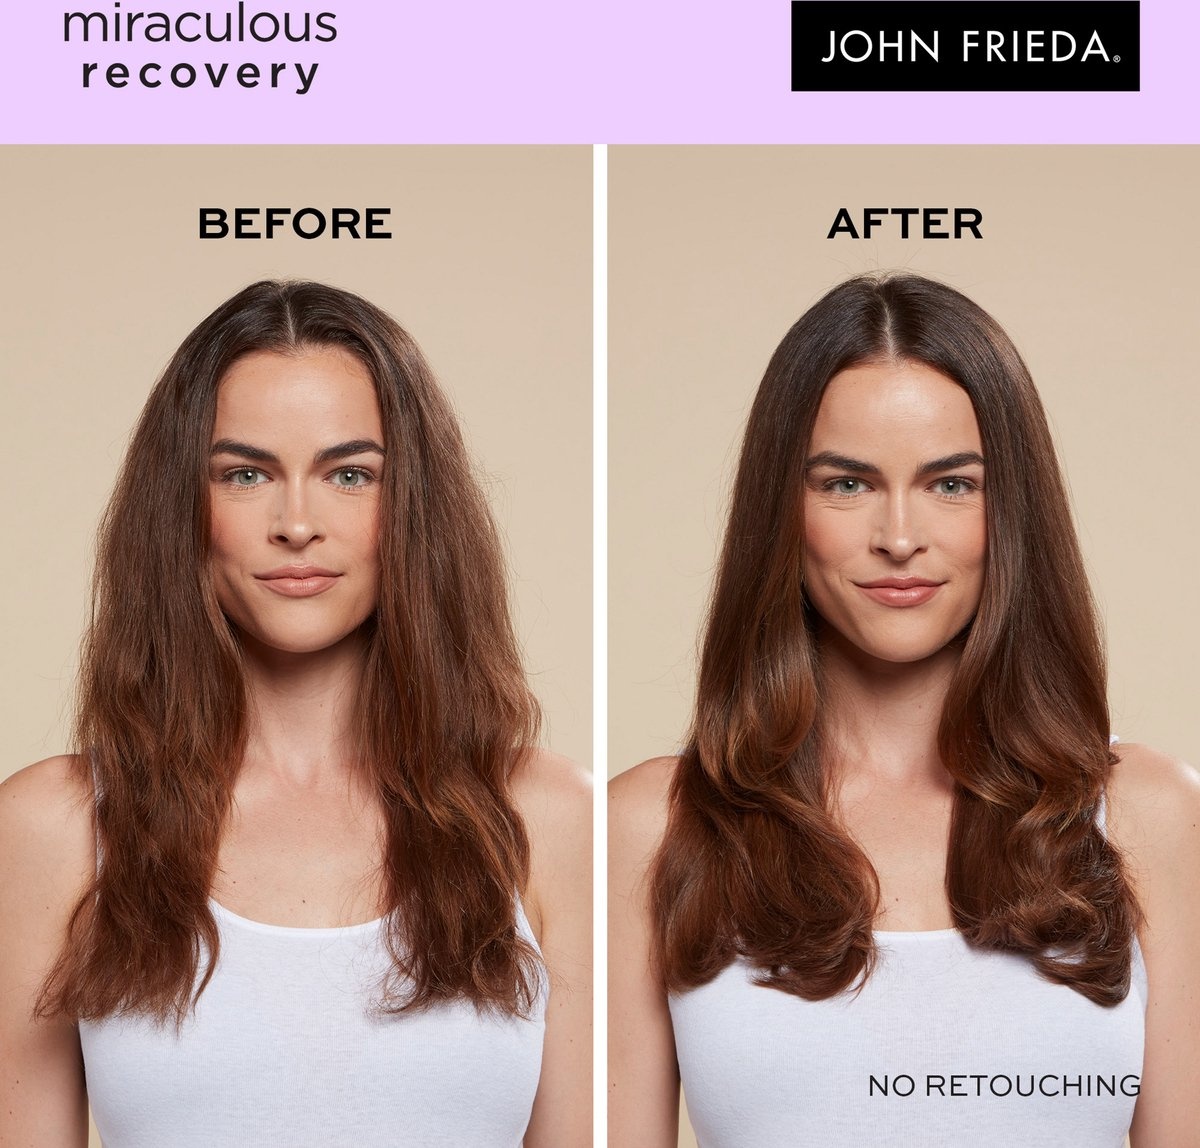 Après-shampooing réparateur John Frieda Frizz Ease Miraculous Recovery 250 ml